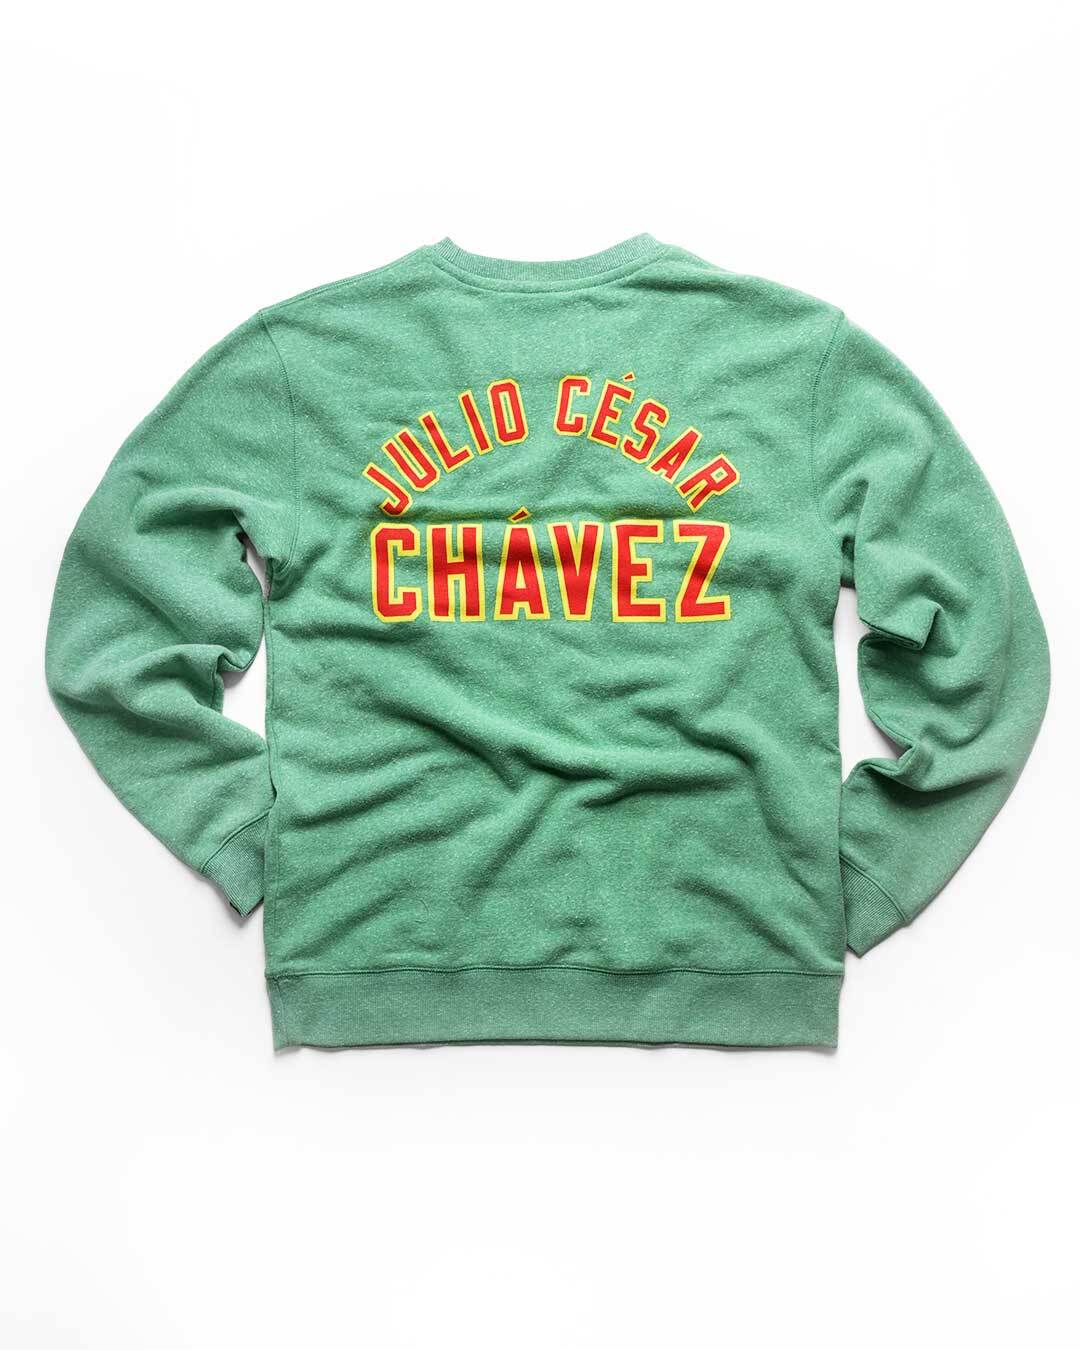 Kronk Gym x Chavez Green Sweatshirt - Roots of Fight